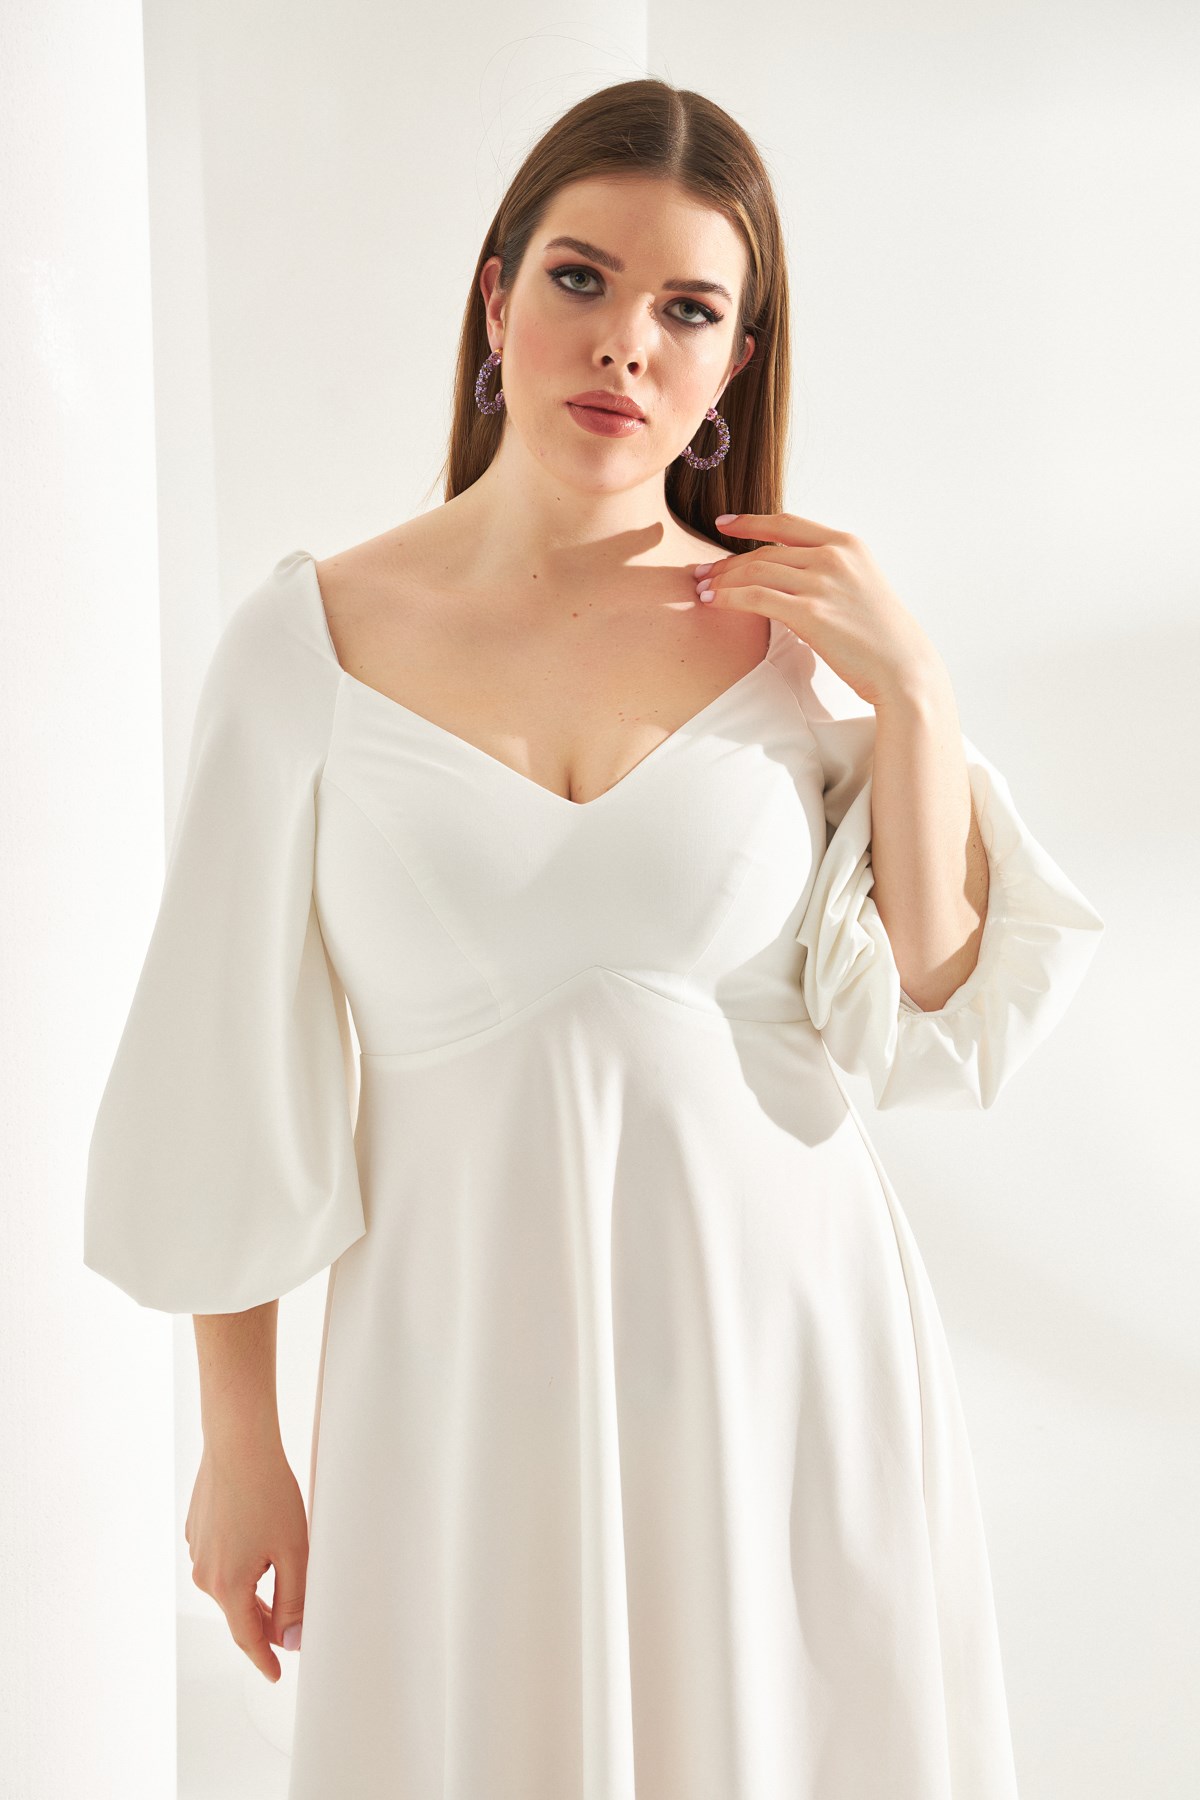 Lilium Dress White - Balloon sleeve white dress | Dress | fashion